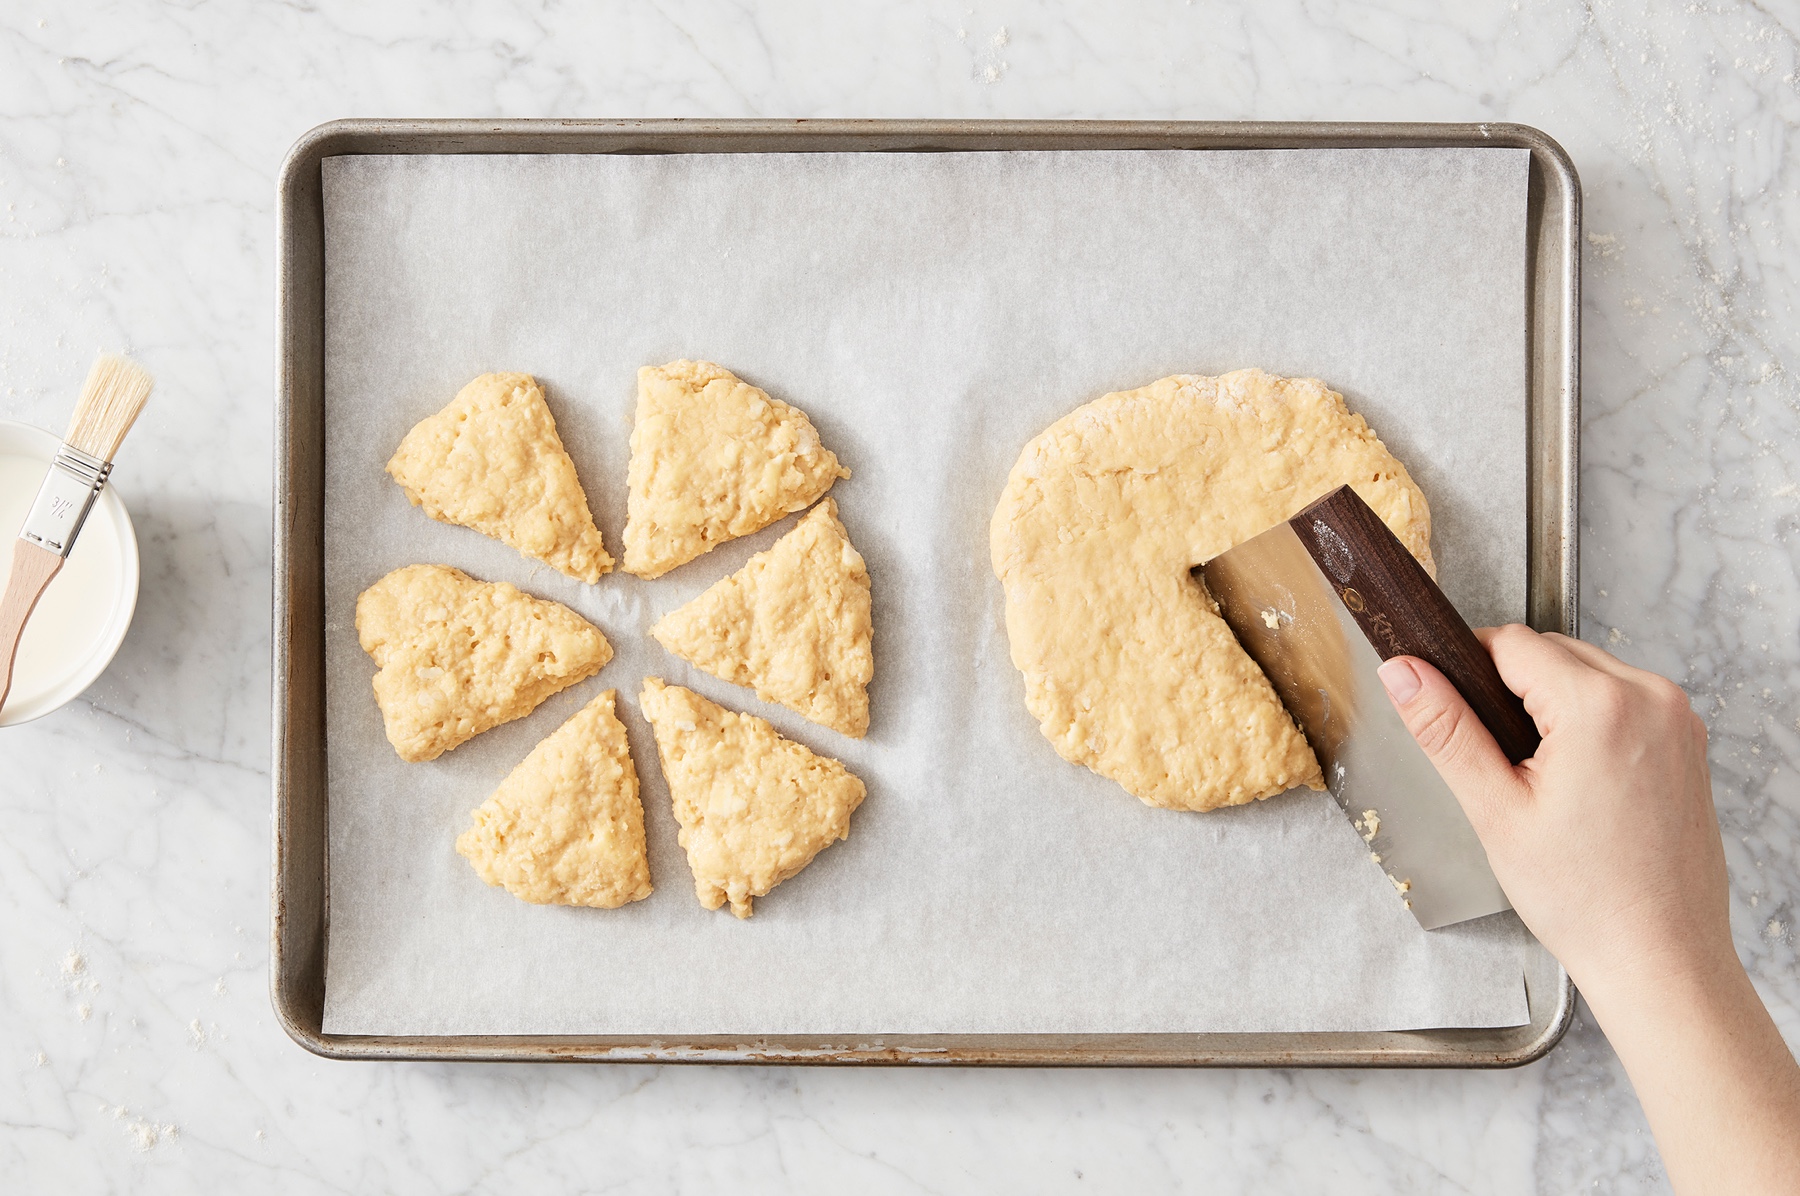 Cutting scone dough into triangles